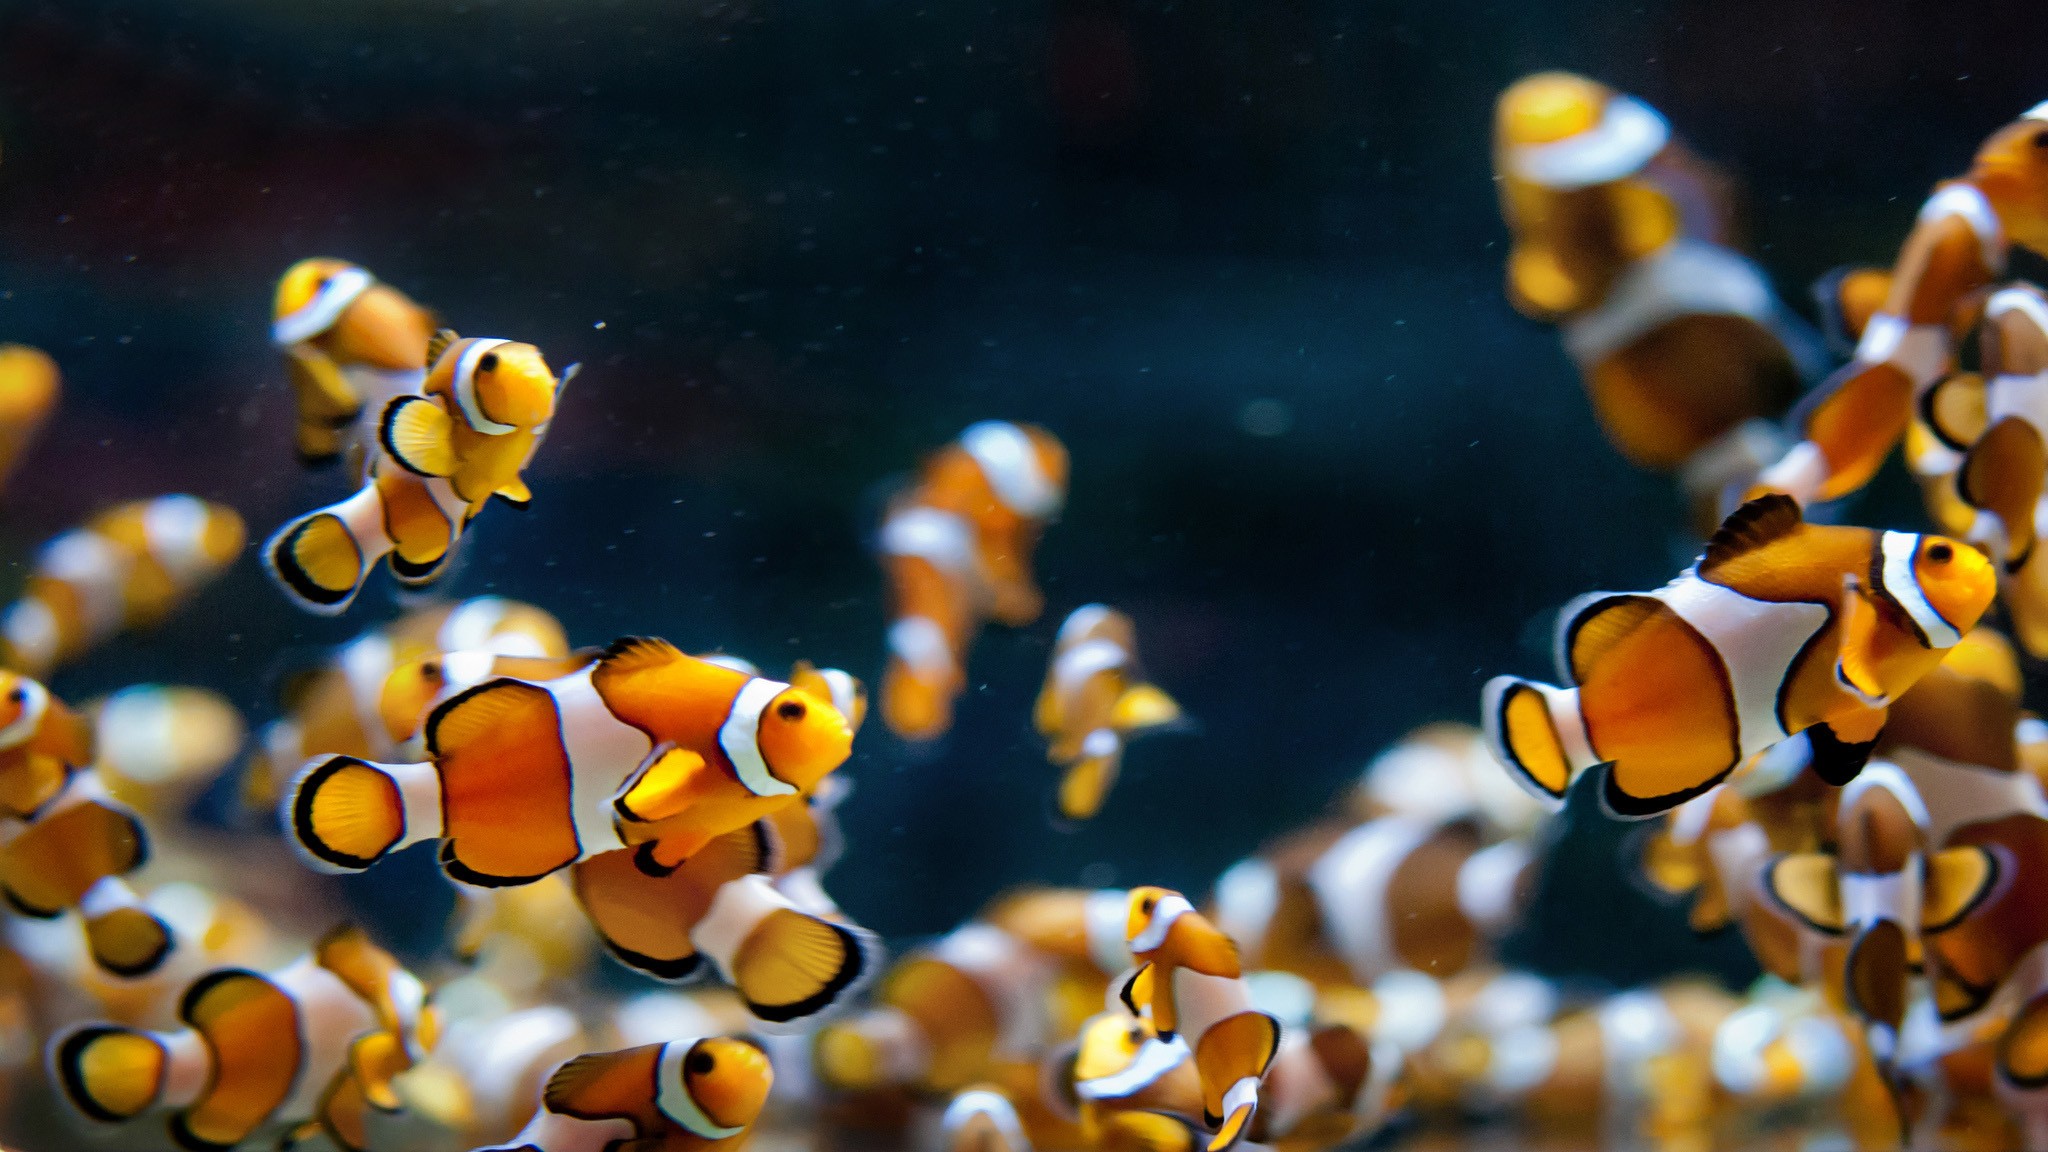 Wallpapers anemone fish biology marine biology on the desktop